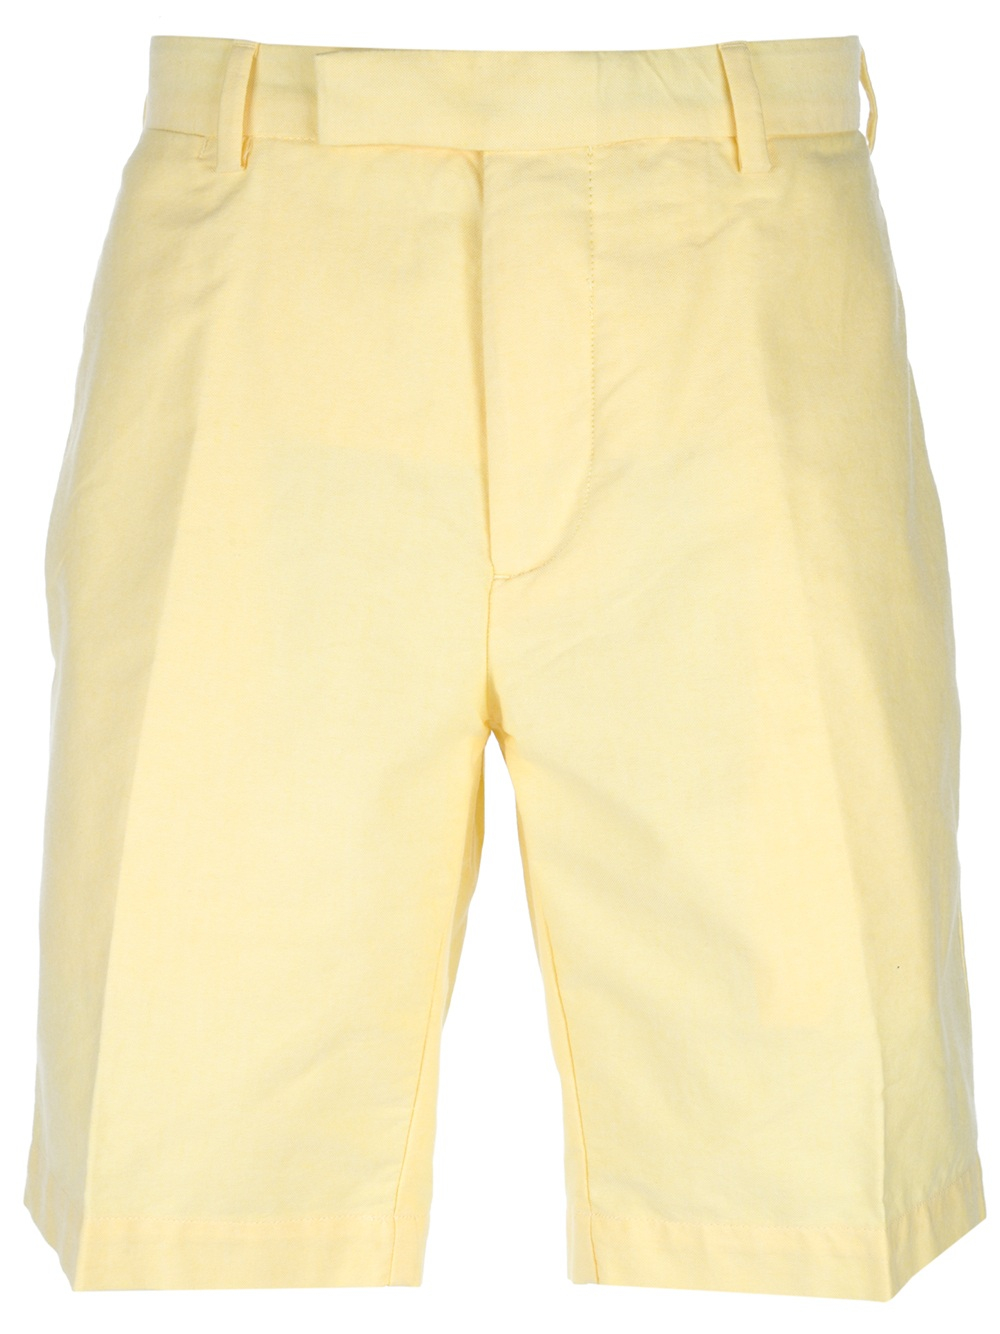 Lyst - Polo Ralph Lauren Cotton Bermuda Shorts in Yellow for Men